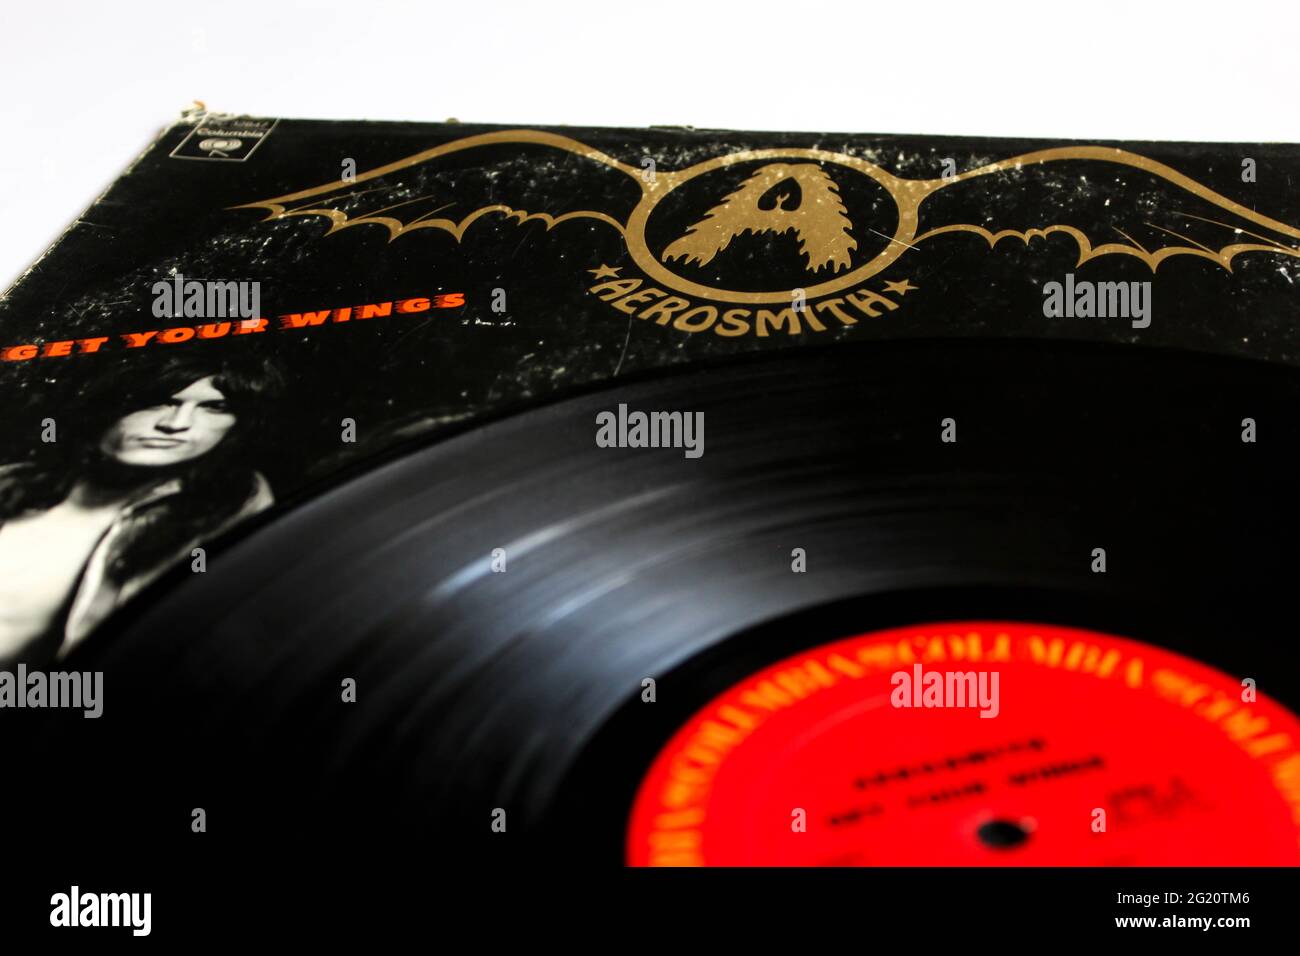 Klassische Rockband, Aerosmith, Musikalbum auf Vinyl-Schallplatte. Mit Dem Titel Get Your Wings Album Cover Stockfoto